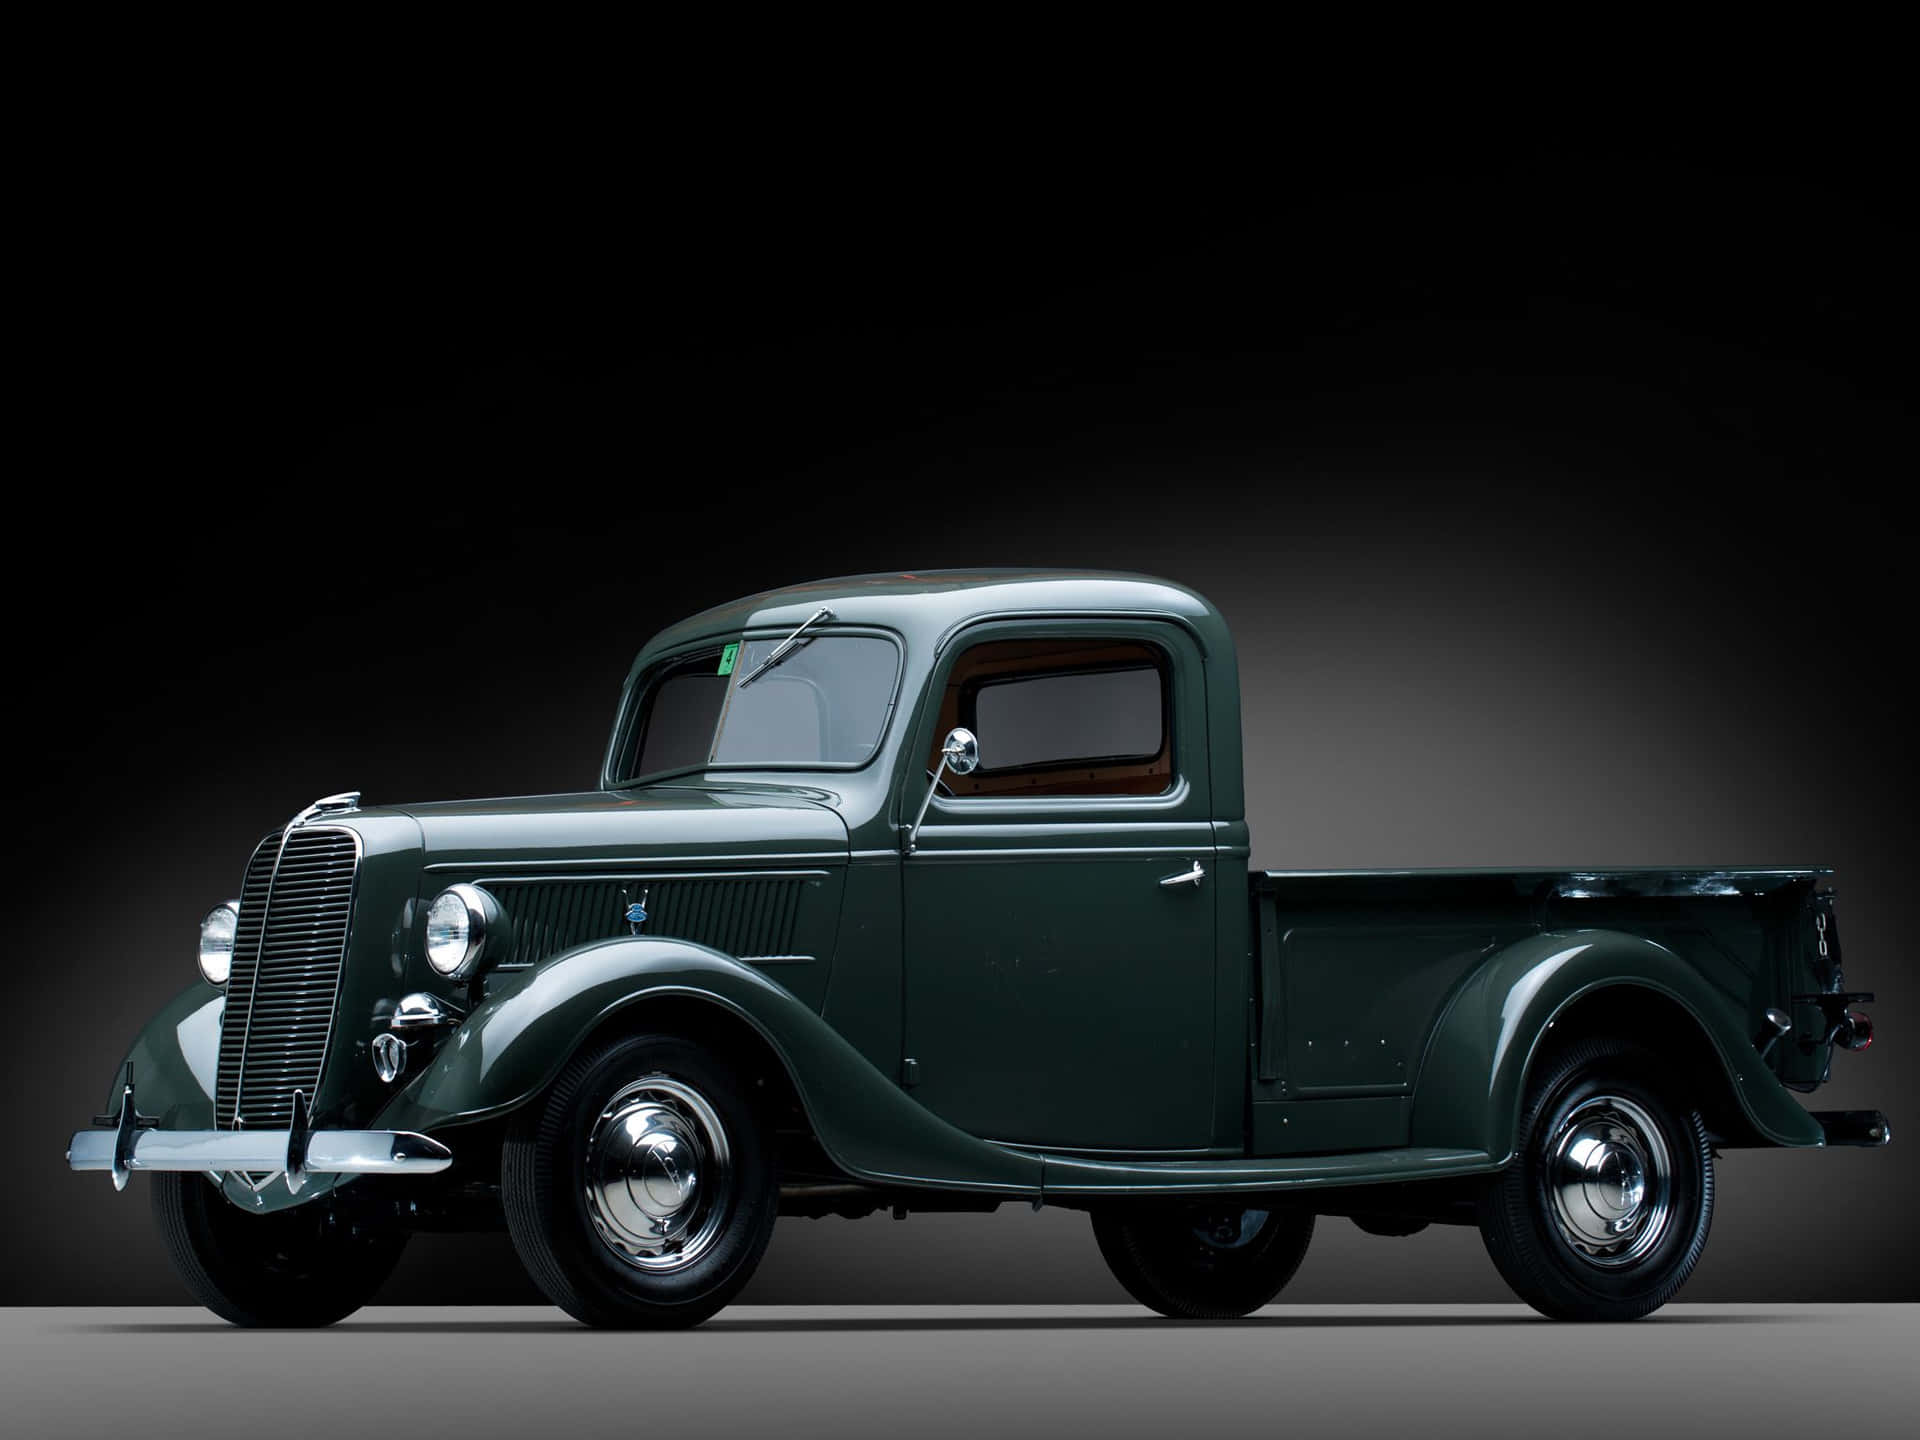 Derklassische Amerikanische Ford-pickup-truck Wallpaper